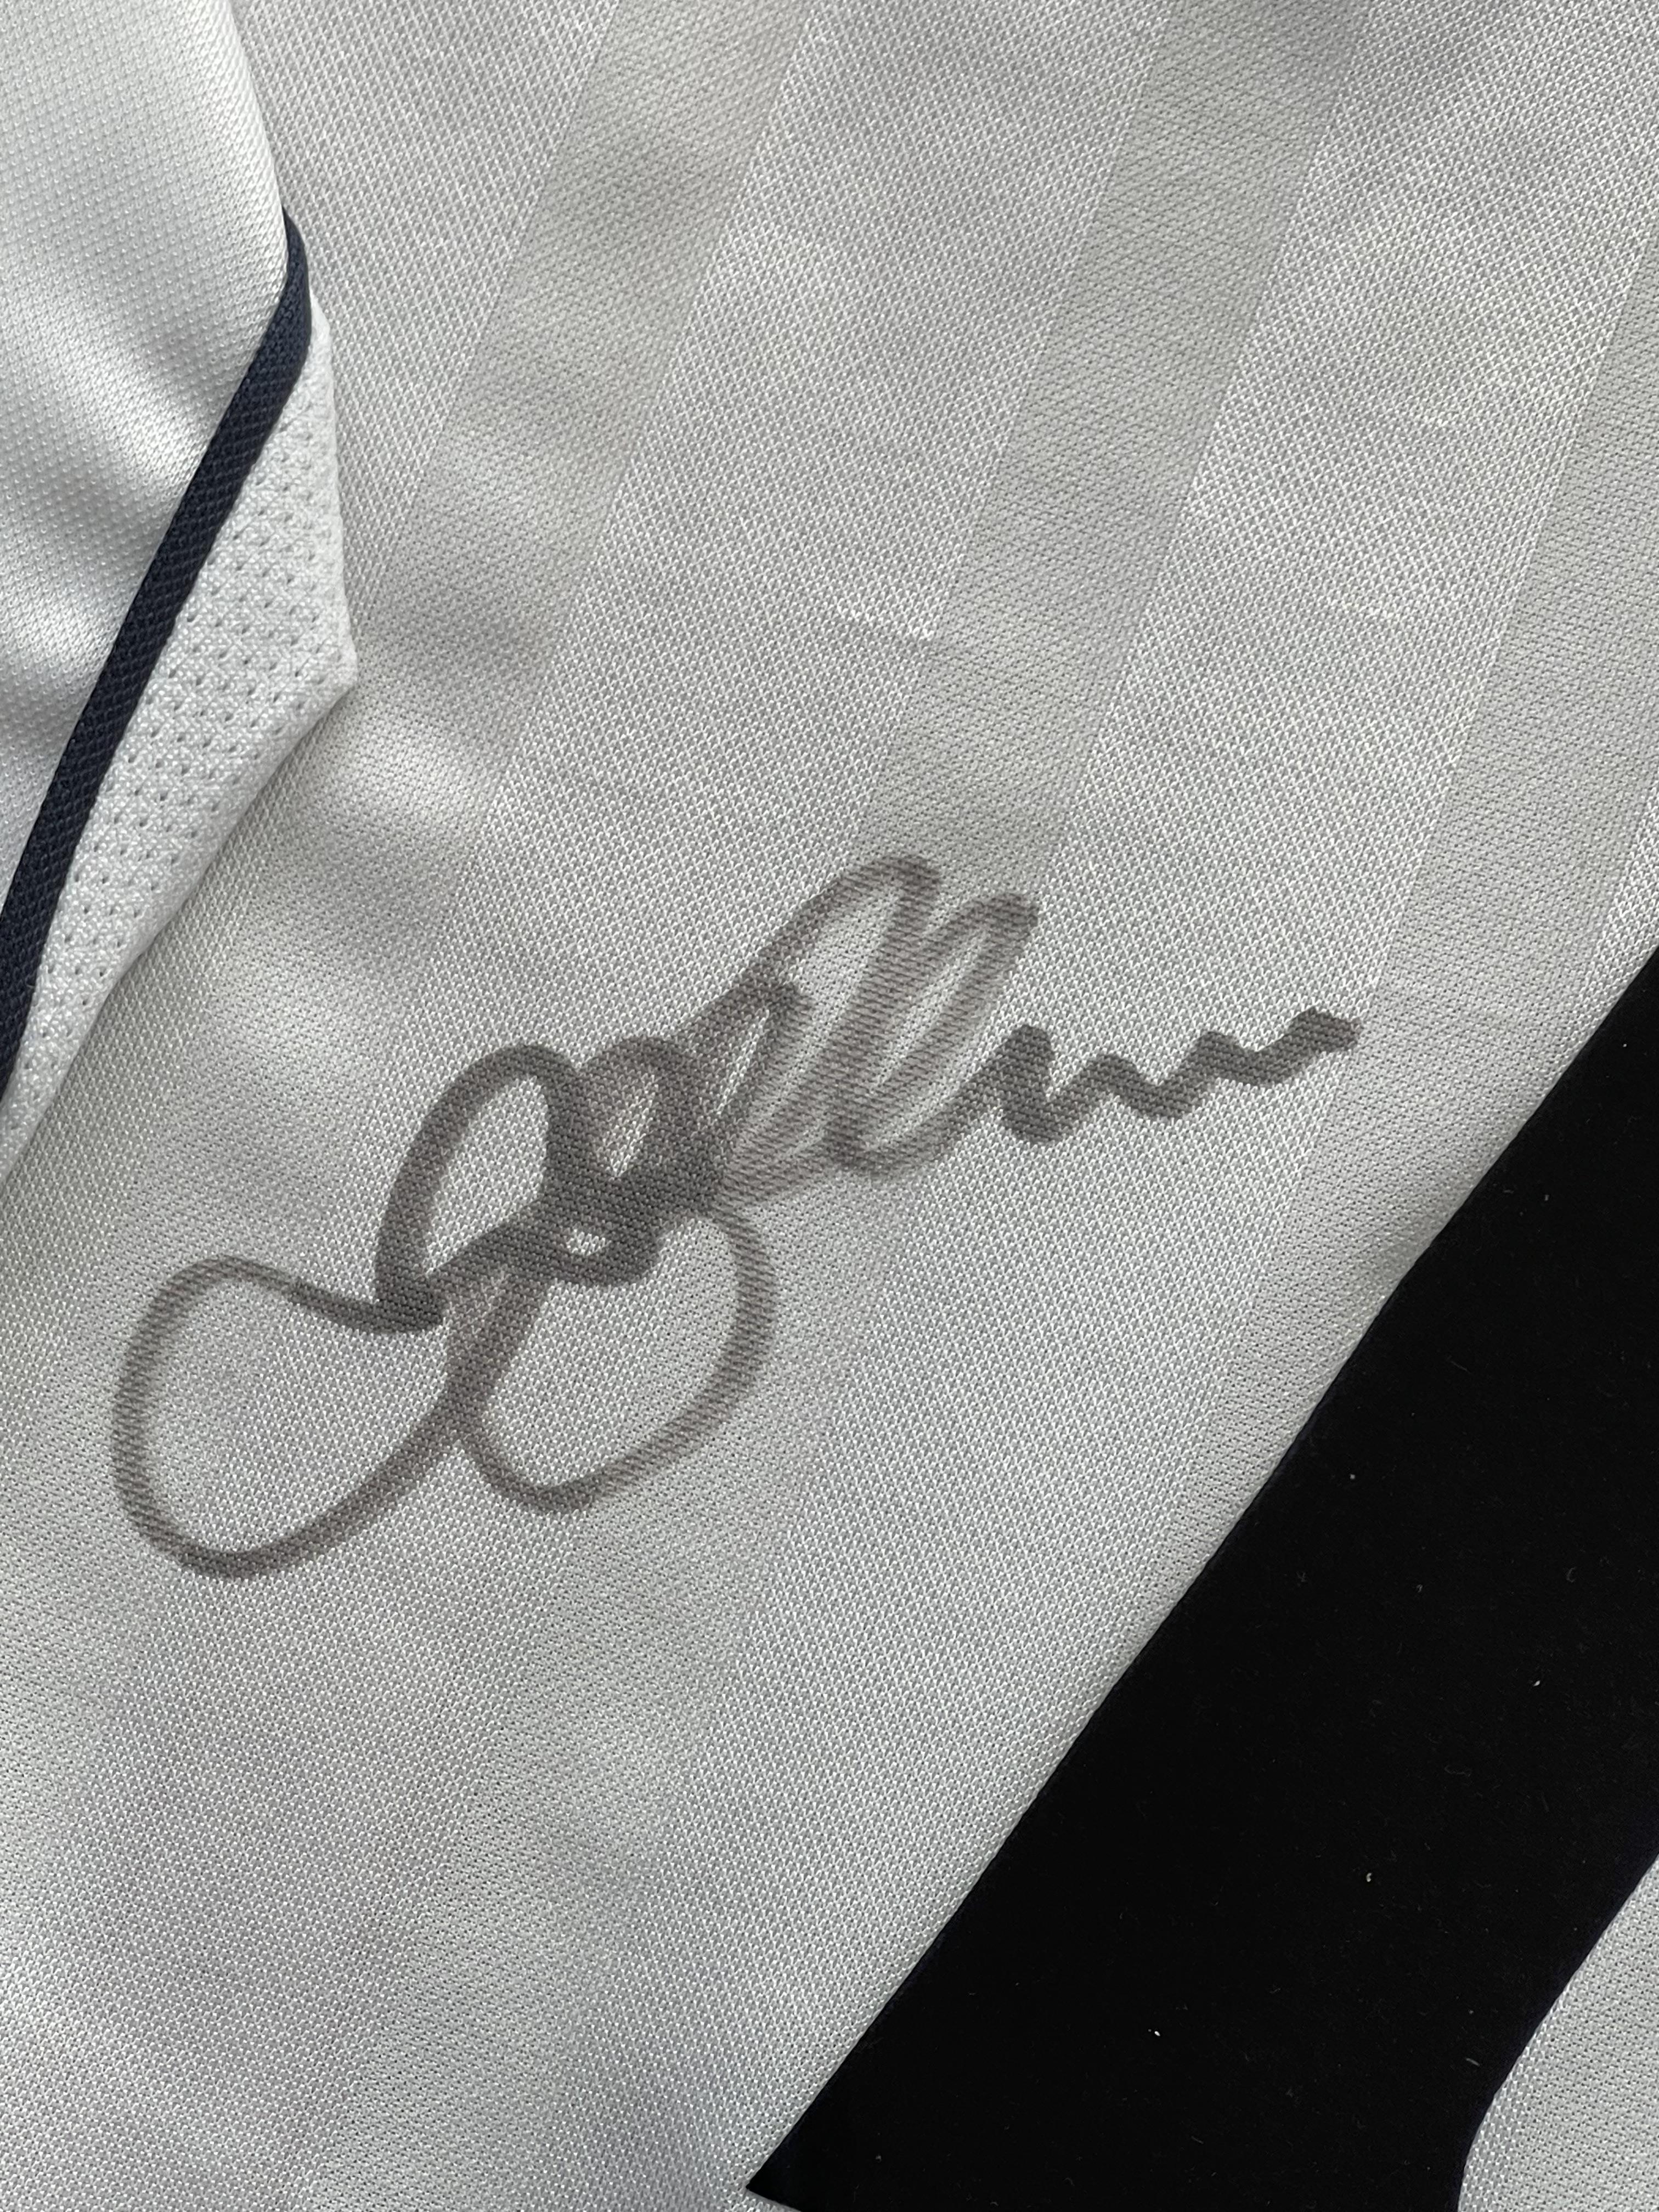 David Beckham - Framed Signed England Shirt with C - Image 8 of 13